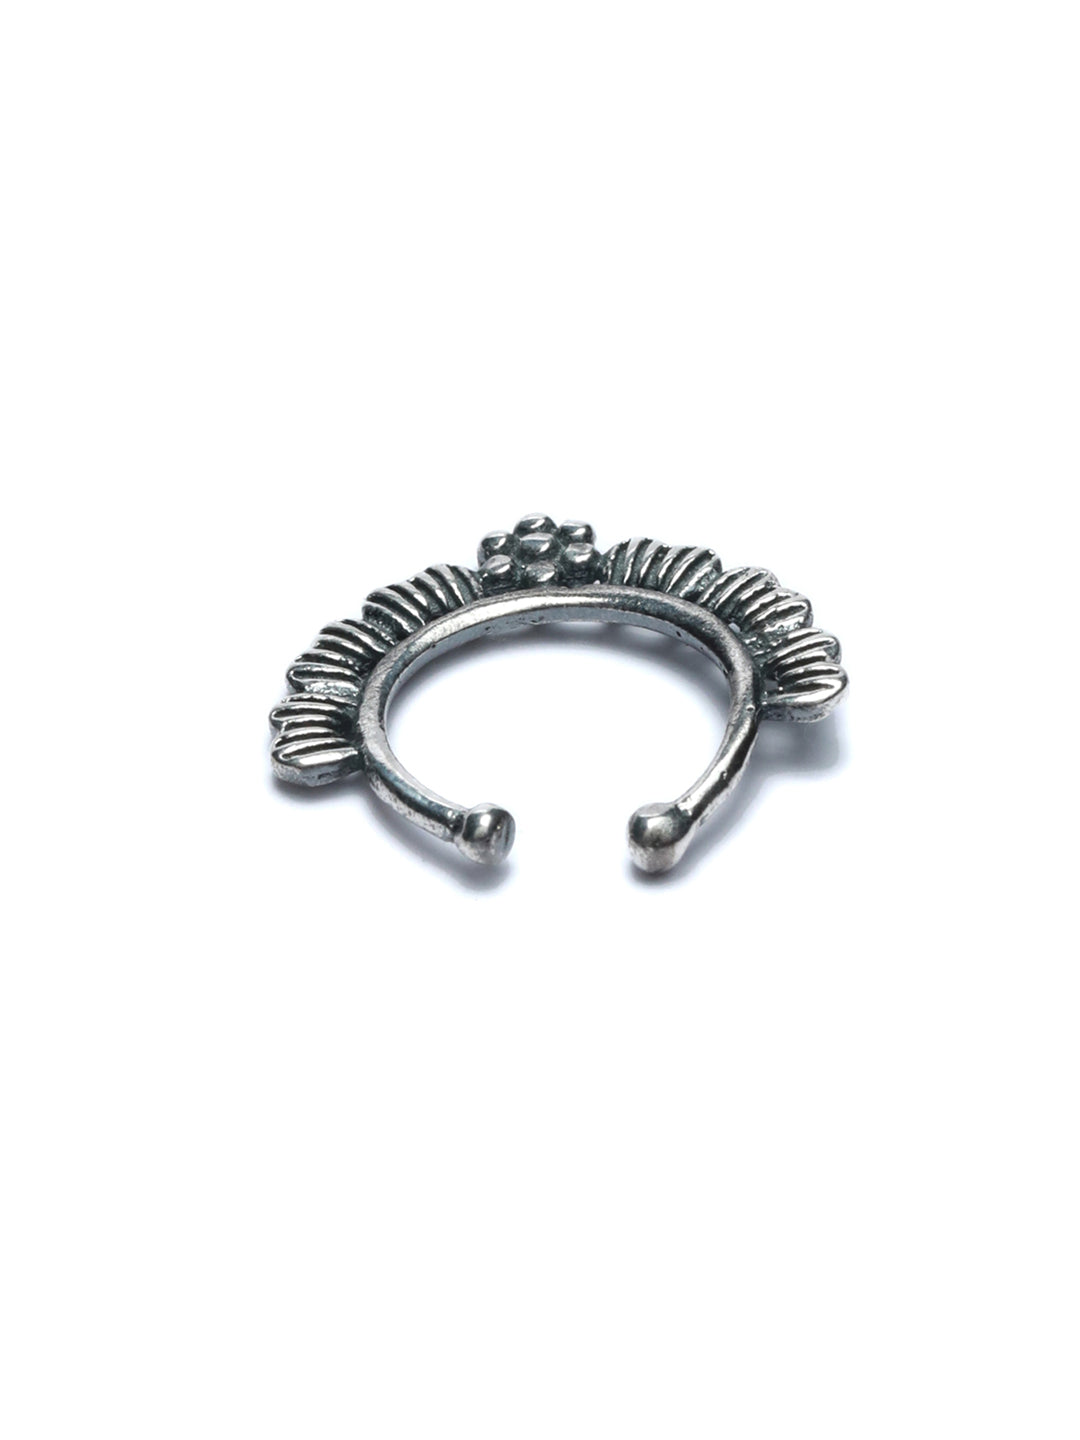 Golden Simple Loop Steel Non-Piercing Fake Septum Ring - BM25.com